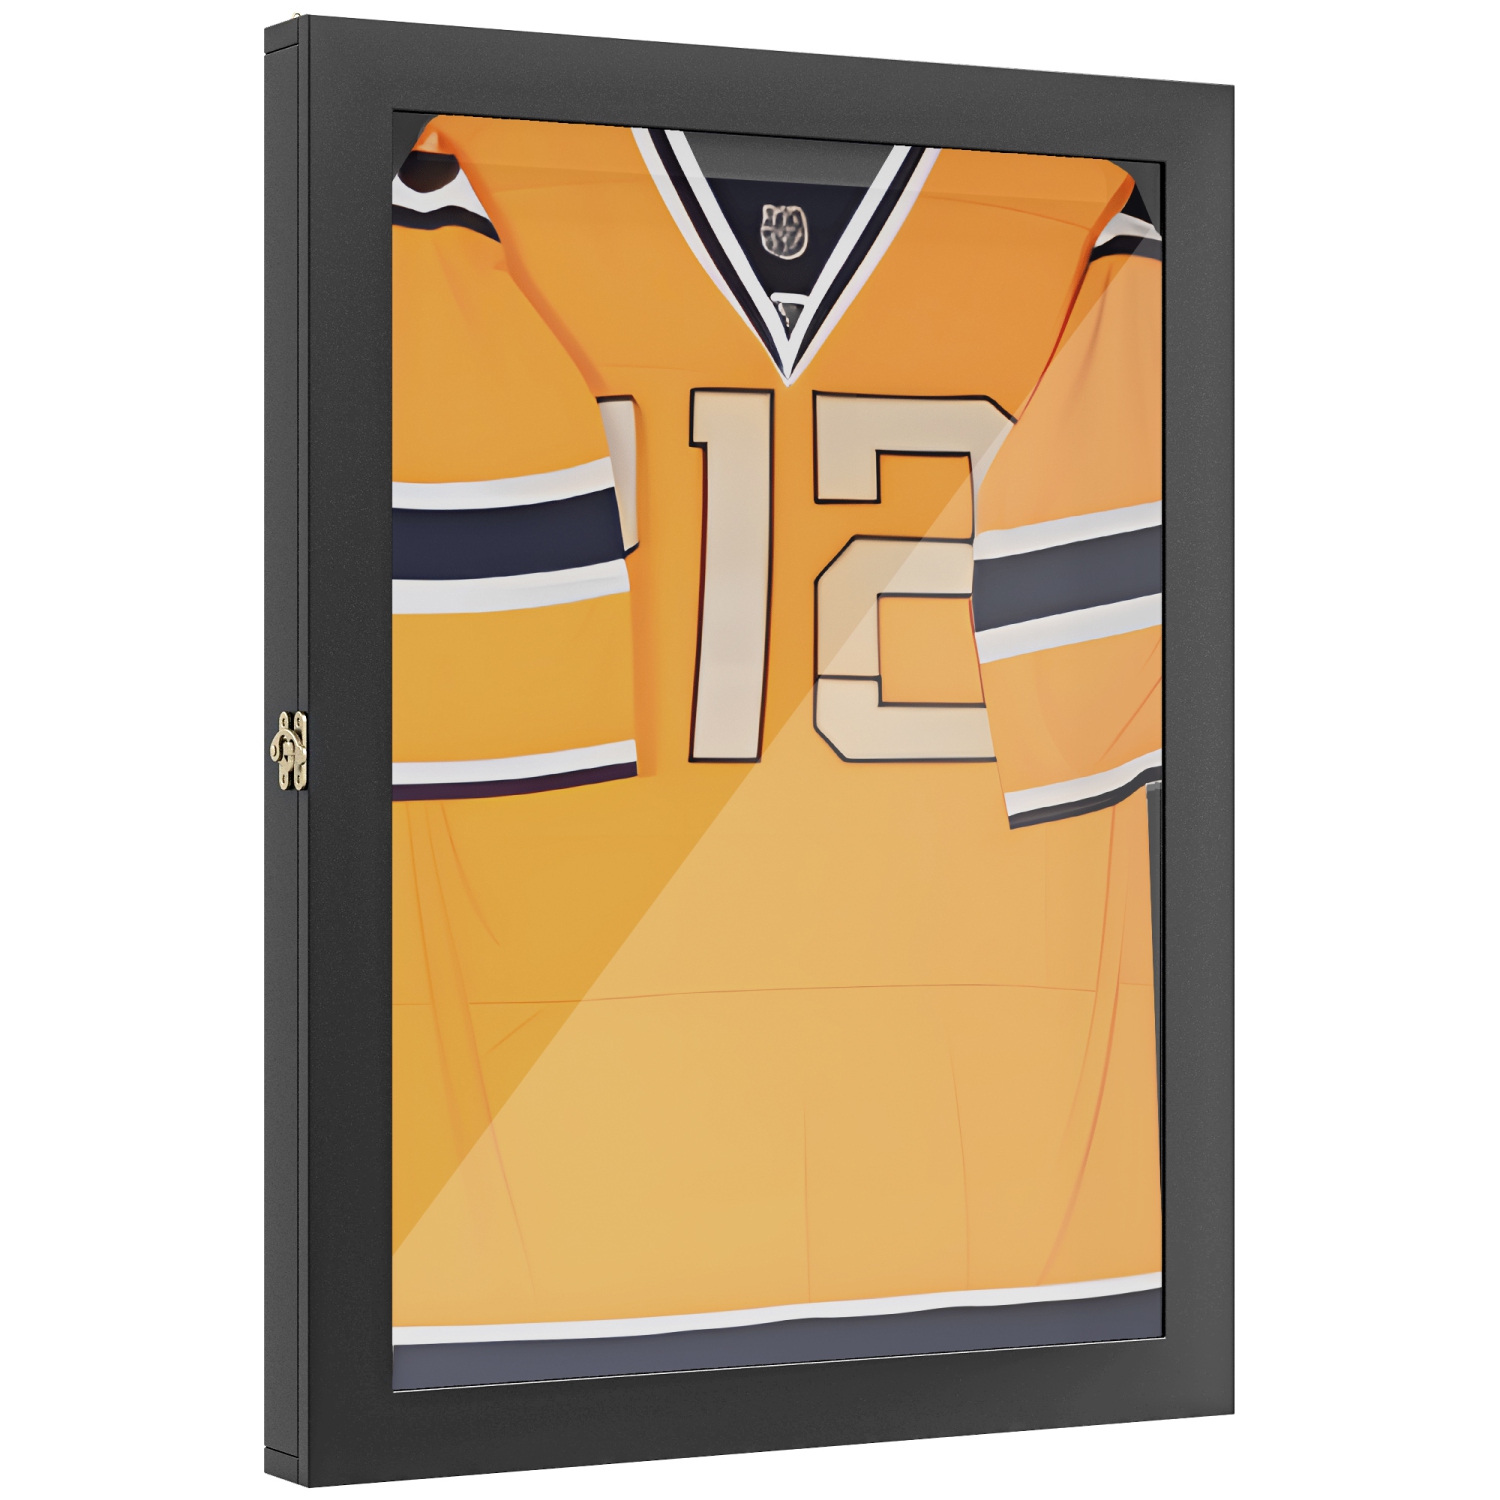 HOMCOM Jersey Display Frame Case, Acrylic Sports Shirt Shadow Box for Basketball Football Baseball (Black, 28" W x 35" H)